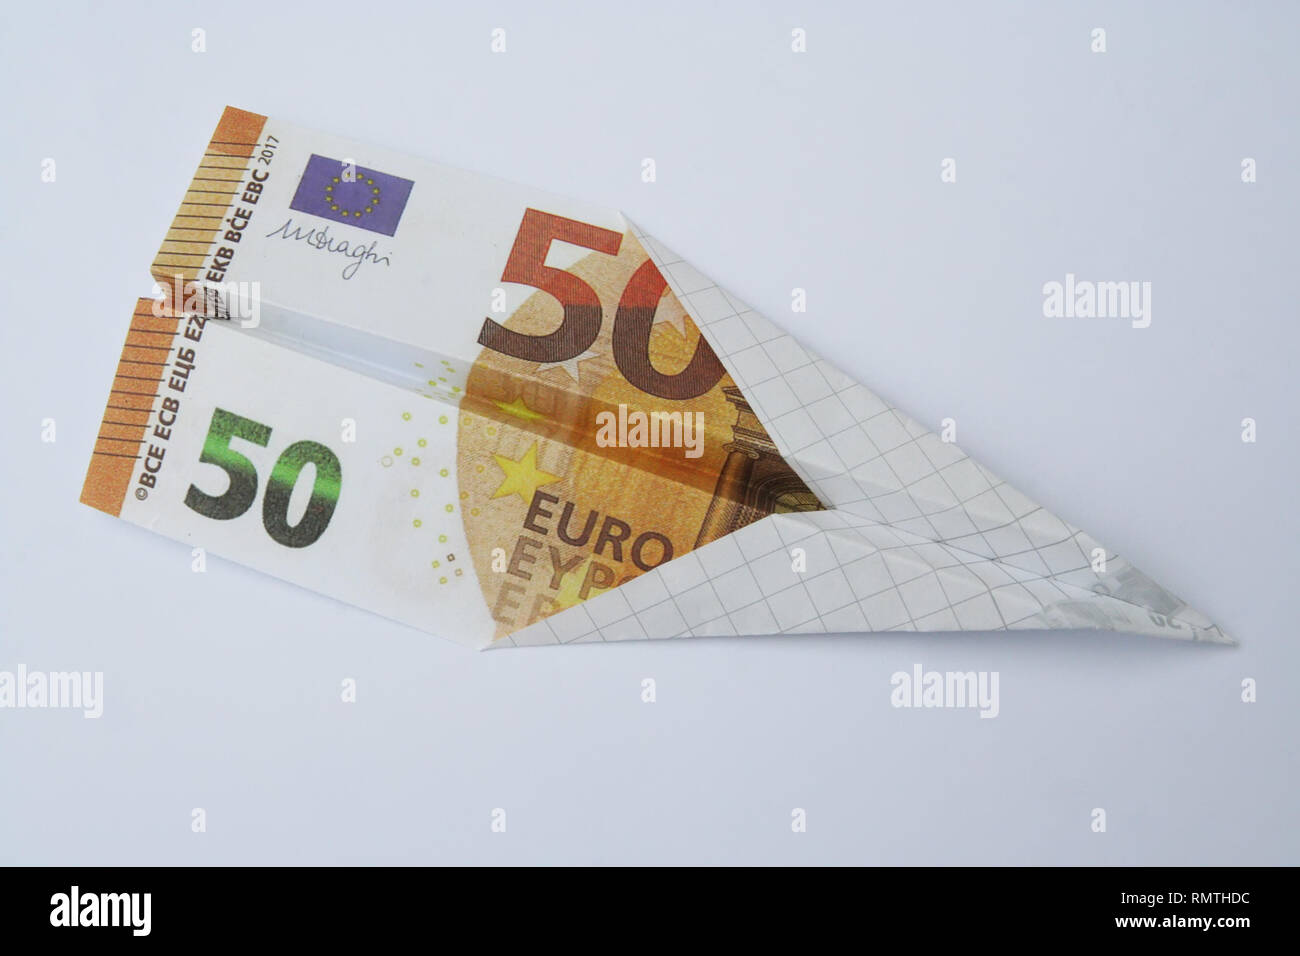 Euro paper bill. Paper aeroplane made of euro bill. Paper plane made of euro currency bill. Stock Photo